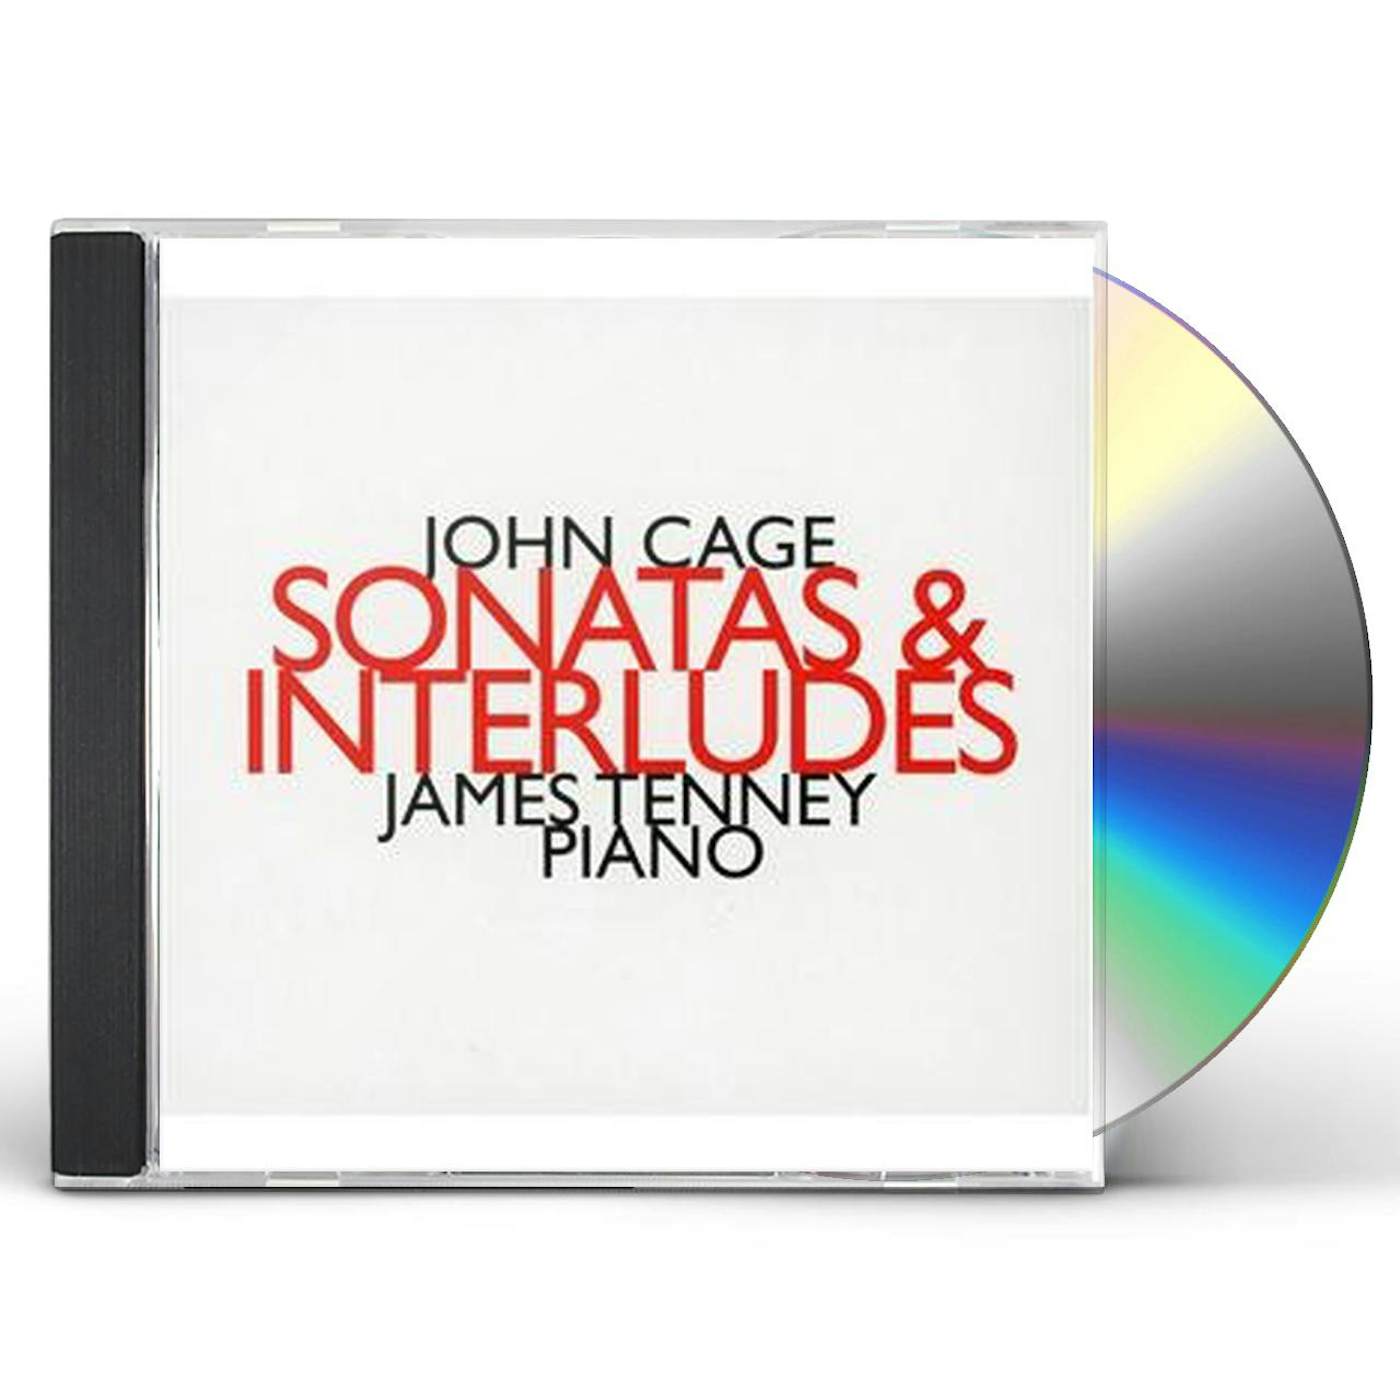 John Cage SONATAS & INTERLUDES CD